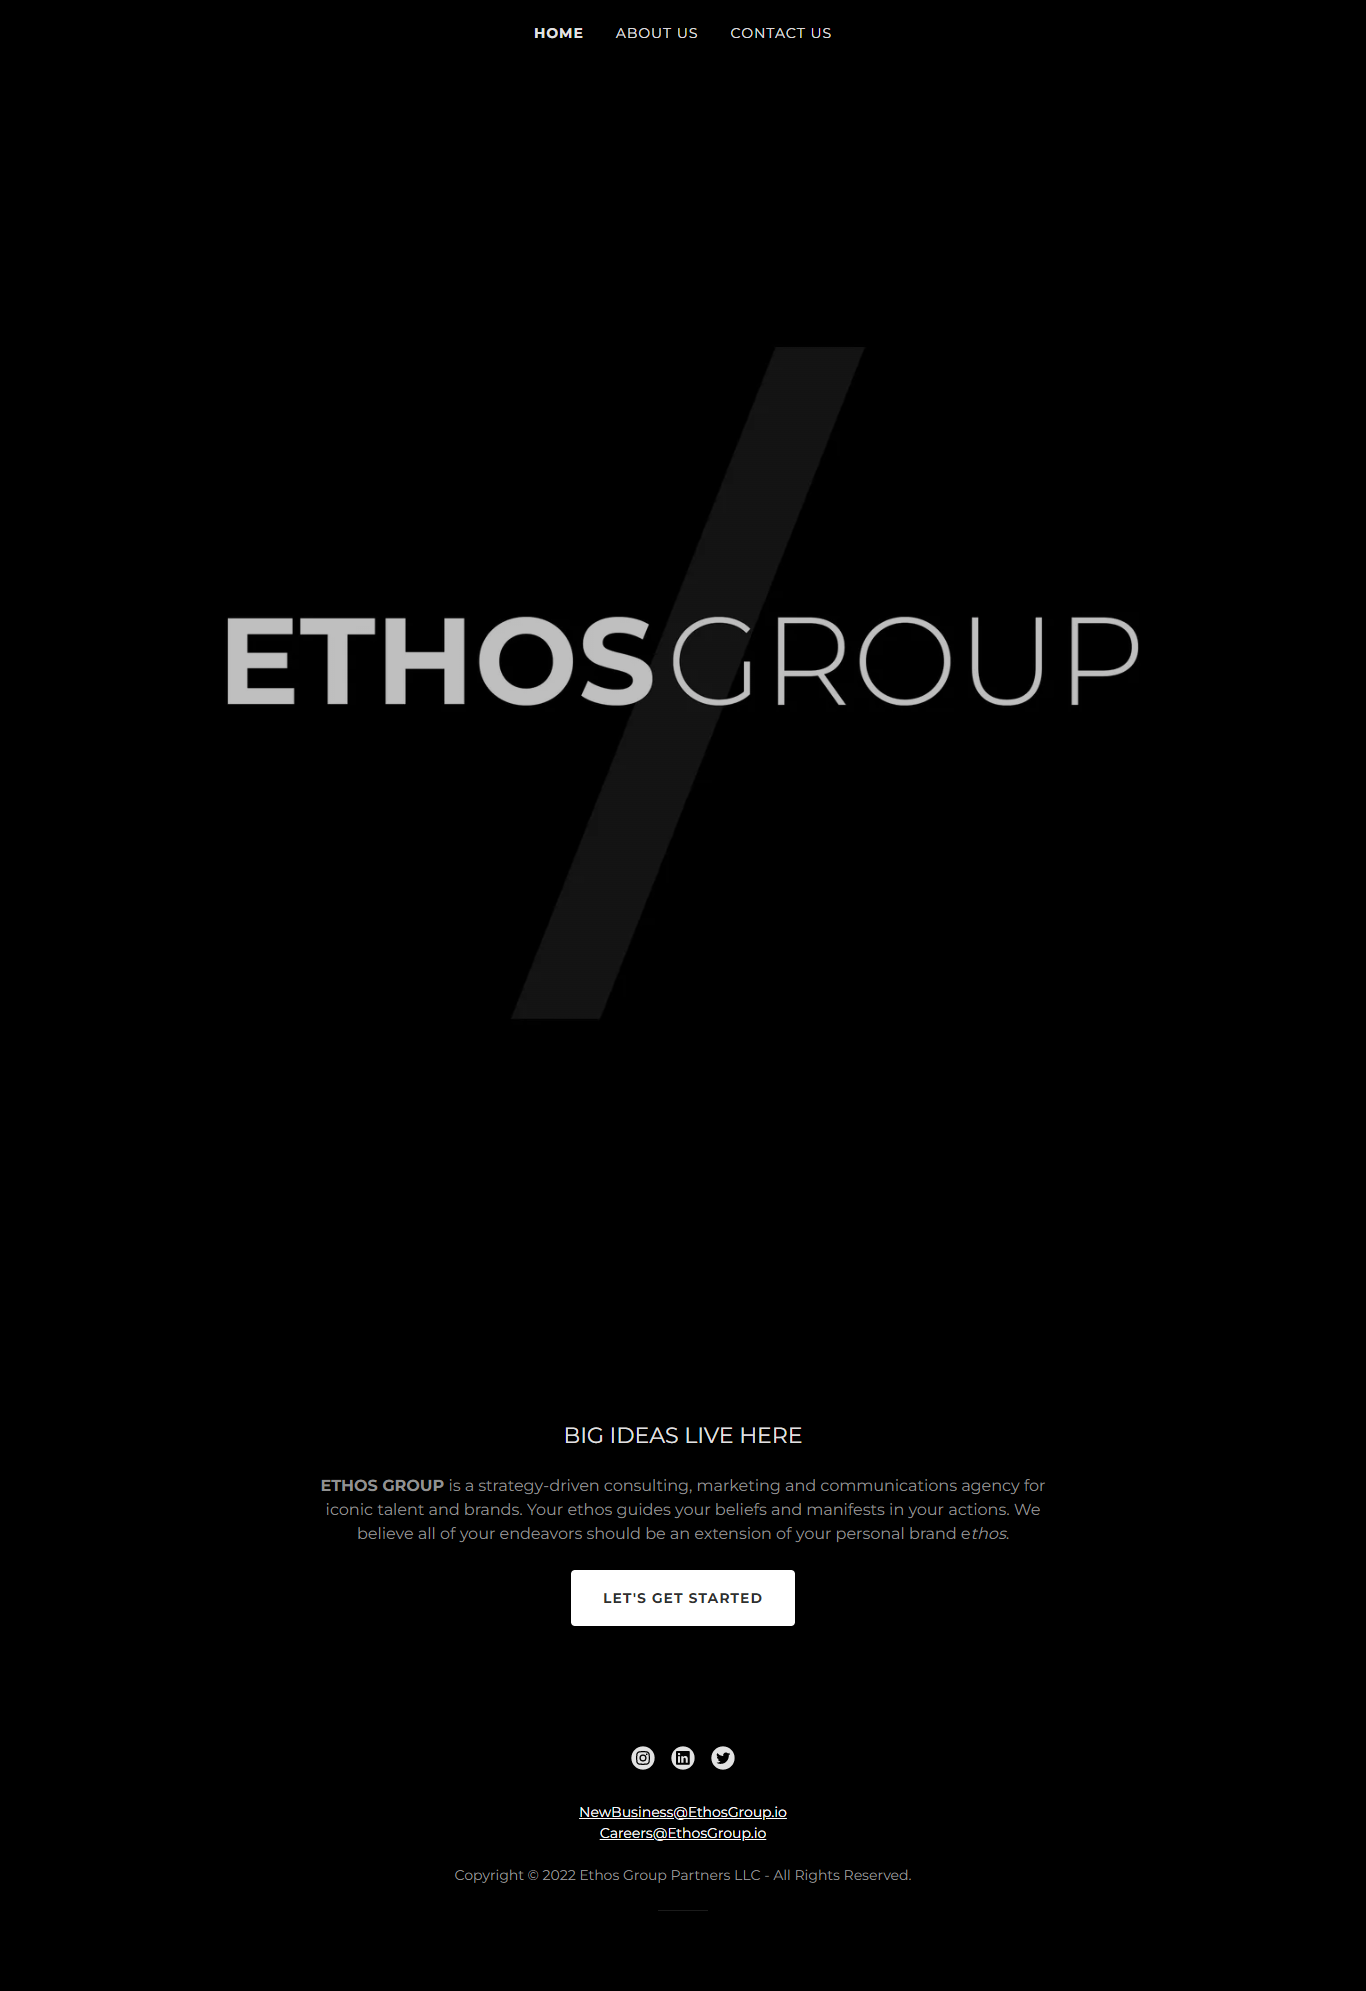 ethos group website design portfolio